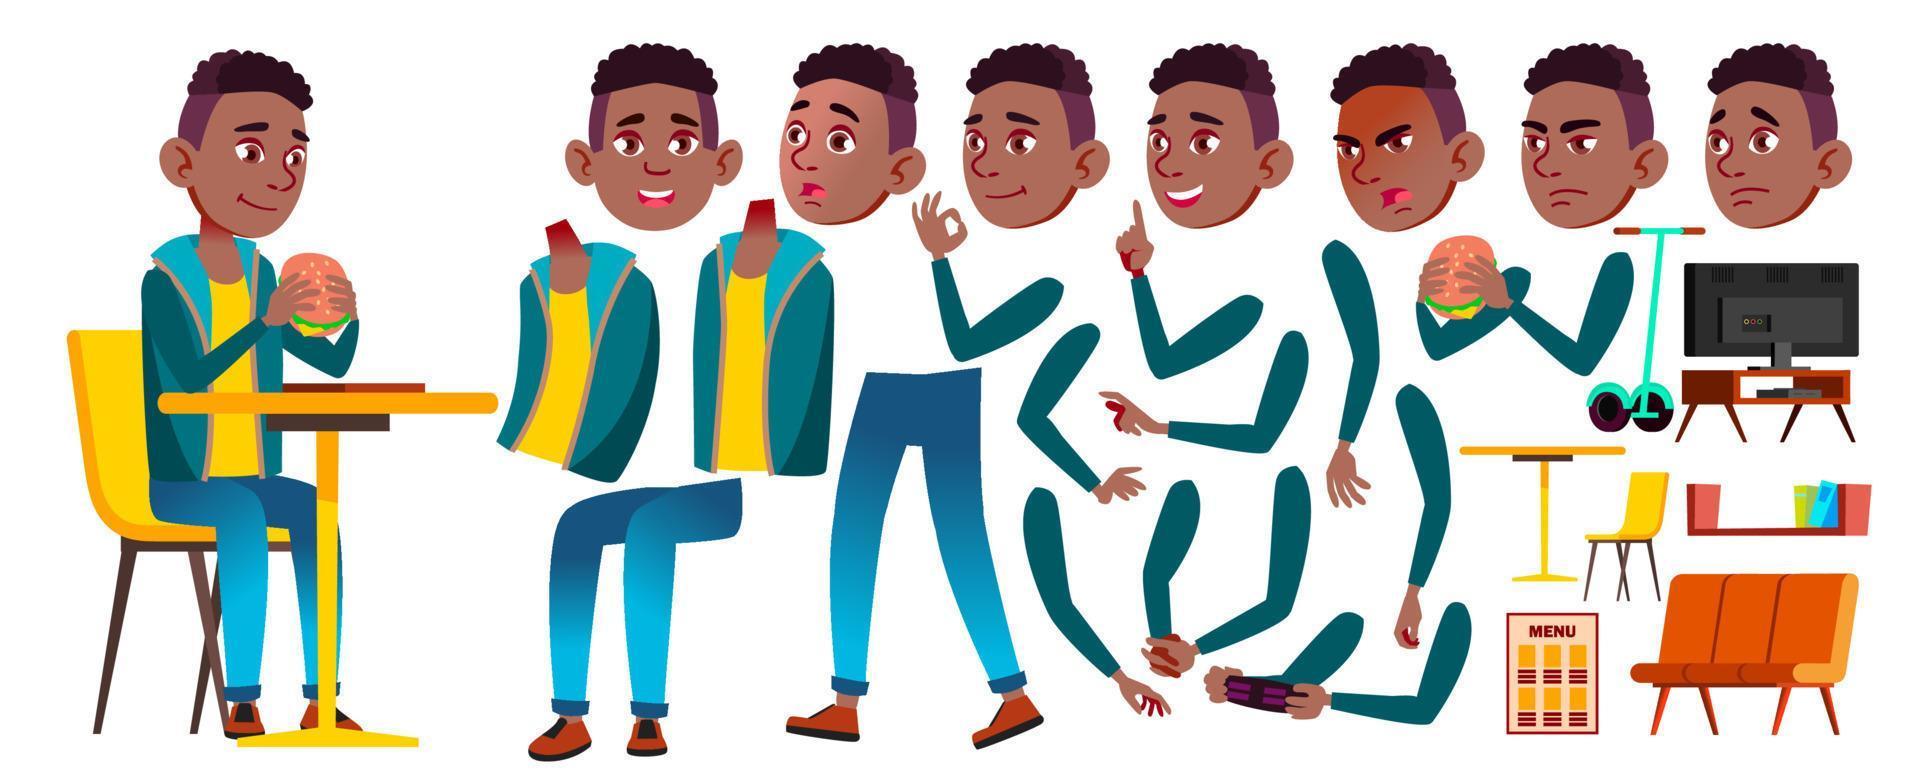 Boy Schoolboy Kid Vector. Black. Afro American. High School Child. Animation Creation Set. Face Emotions, Gestures. Classmate. Teenager, Classroom, Room. Animated. Isolated Cartoon Illustration vector